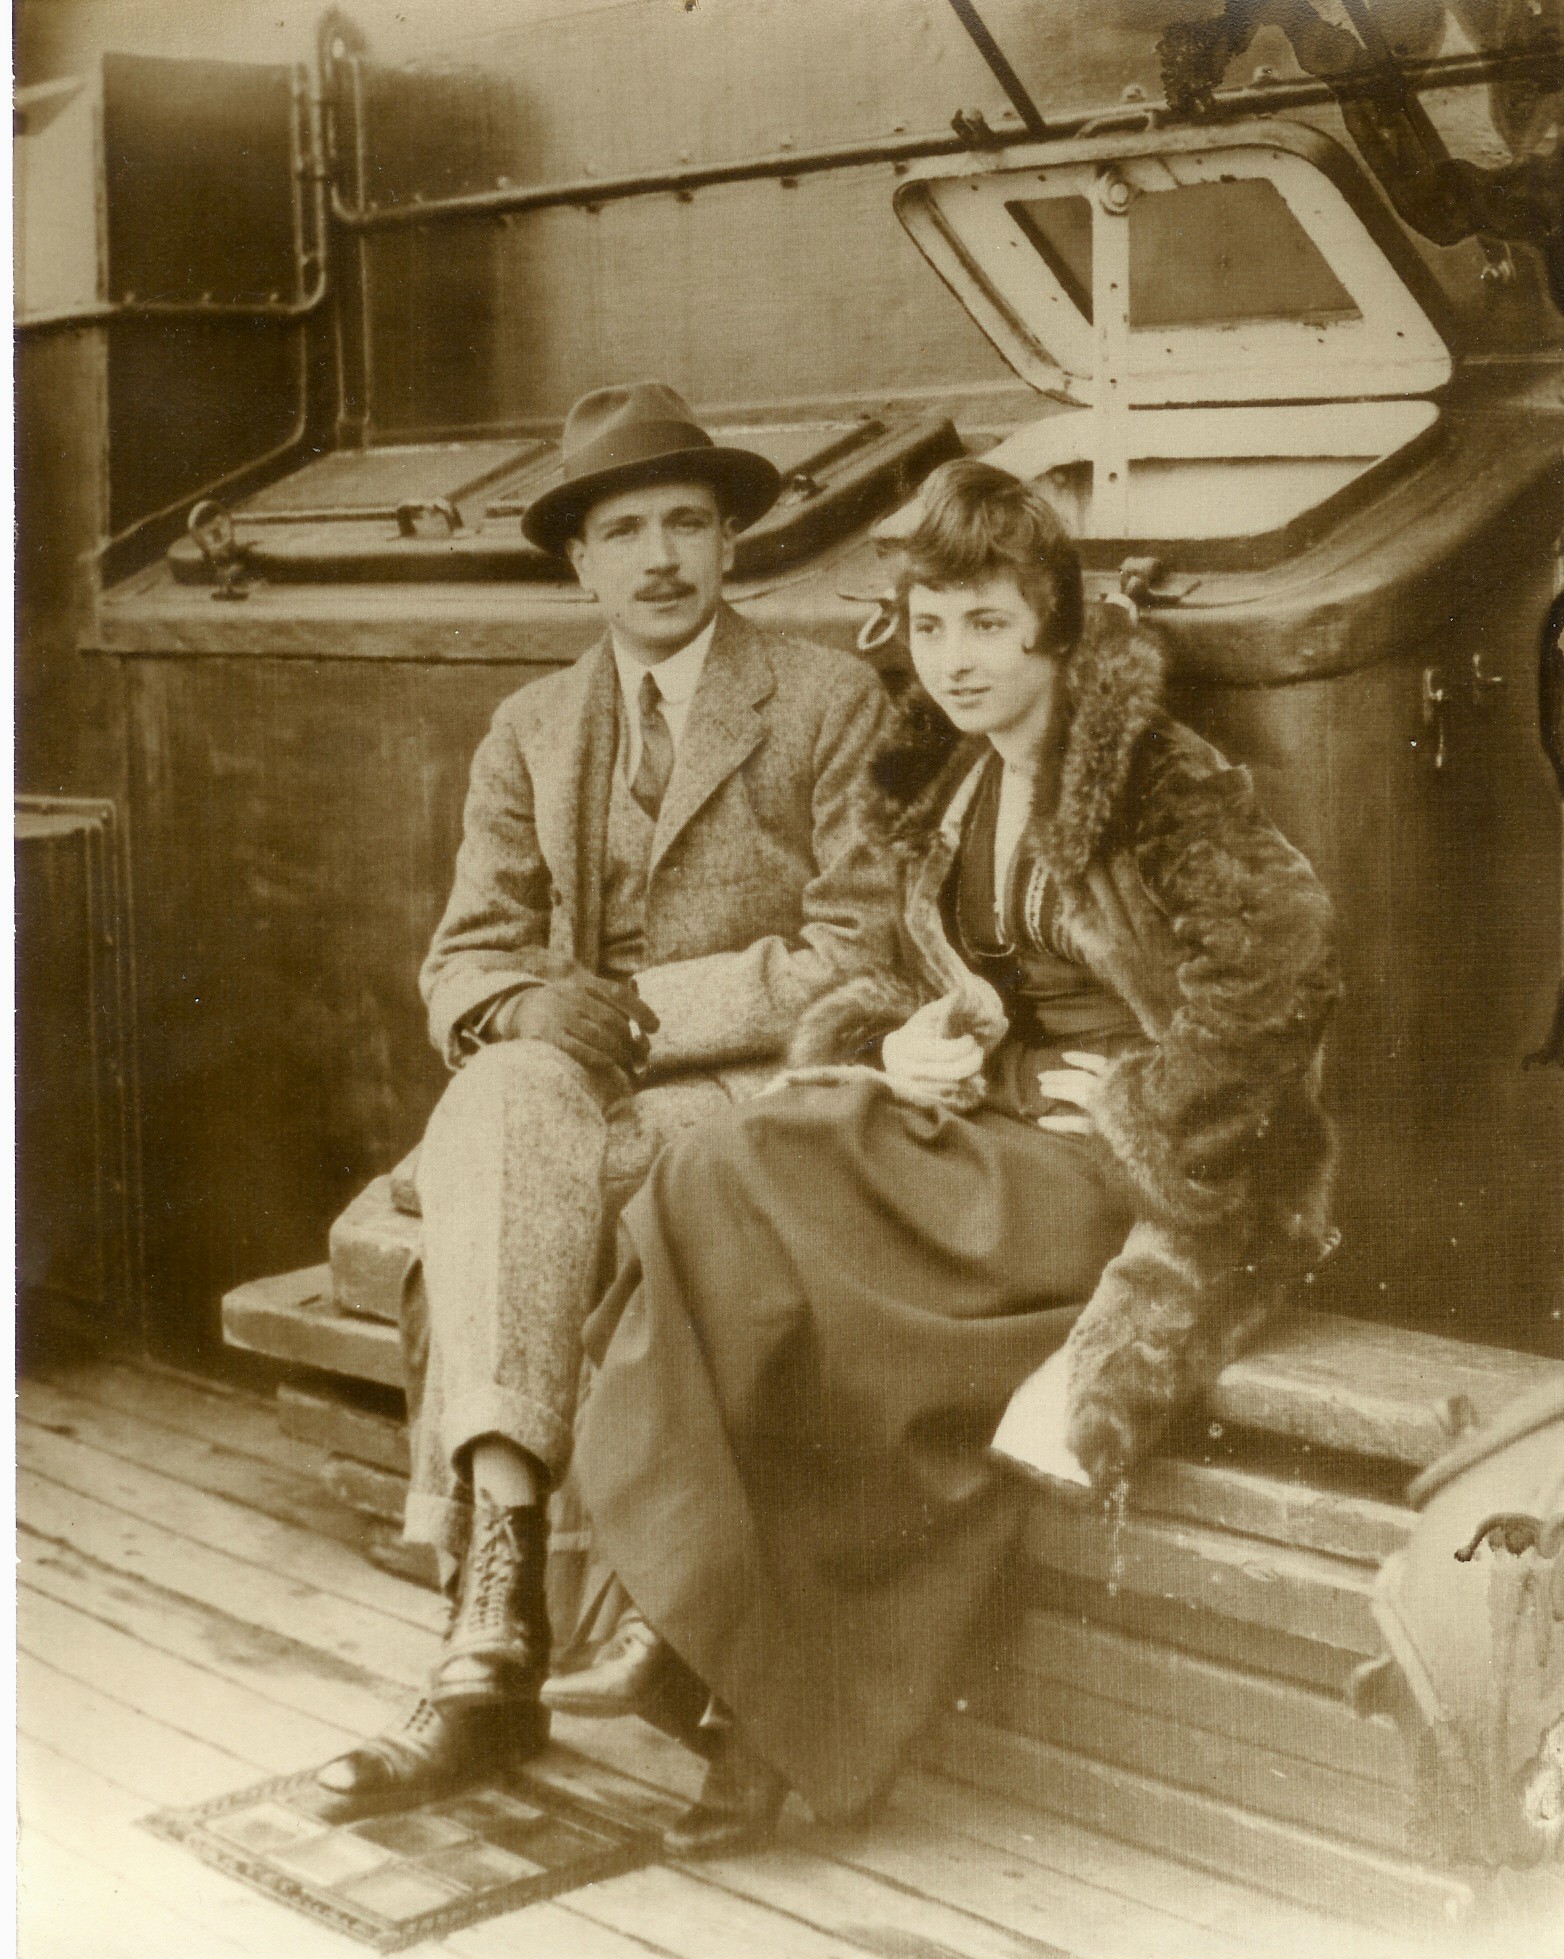 Sepia toned photo of Delfino Cinelli and his wife